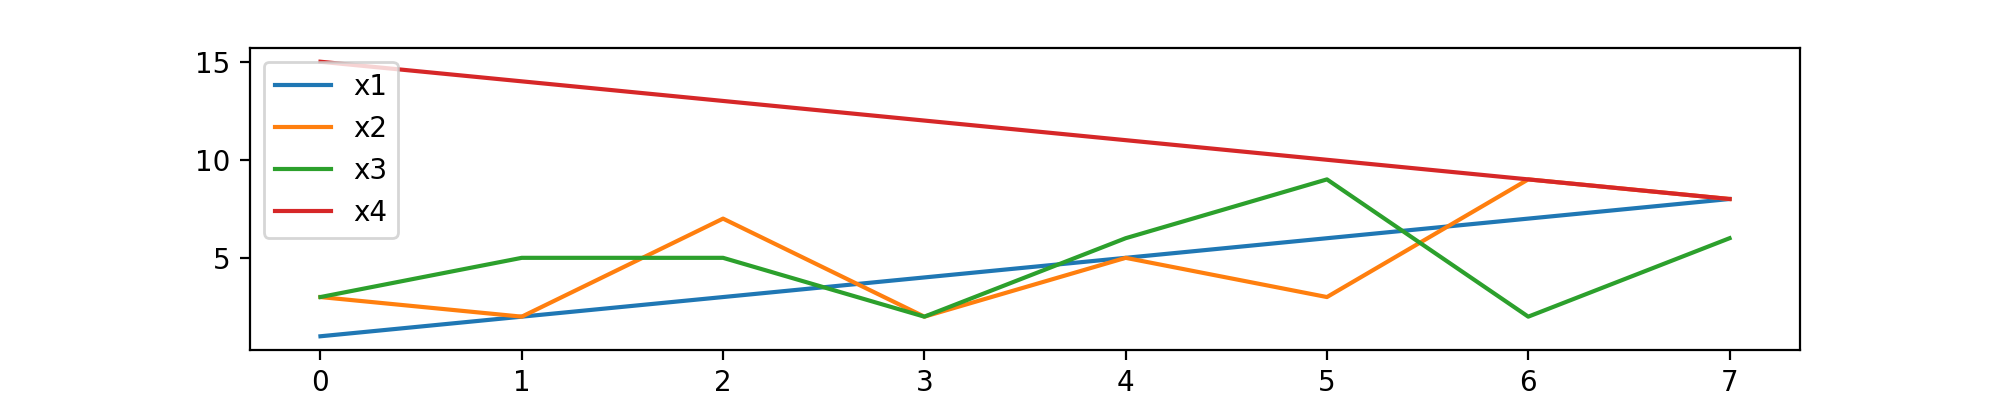 pandas DataFrame Plot Figure 13